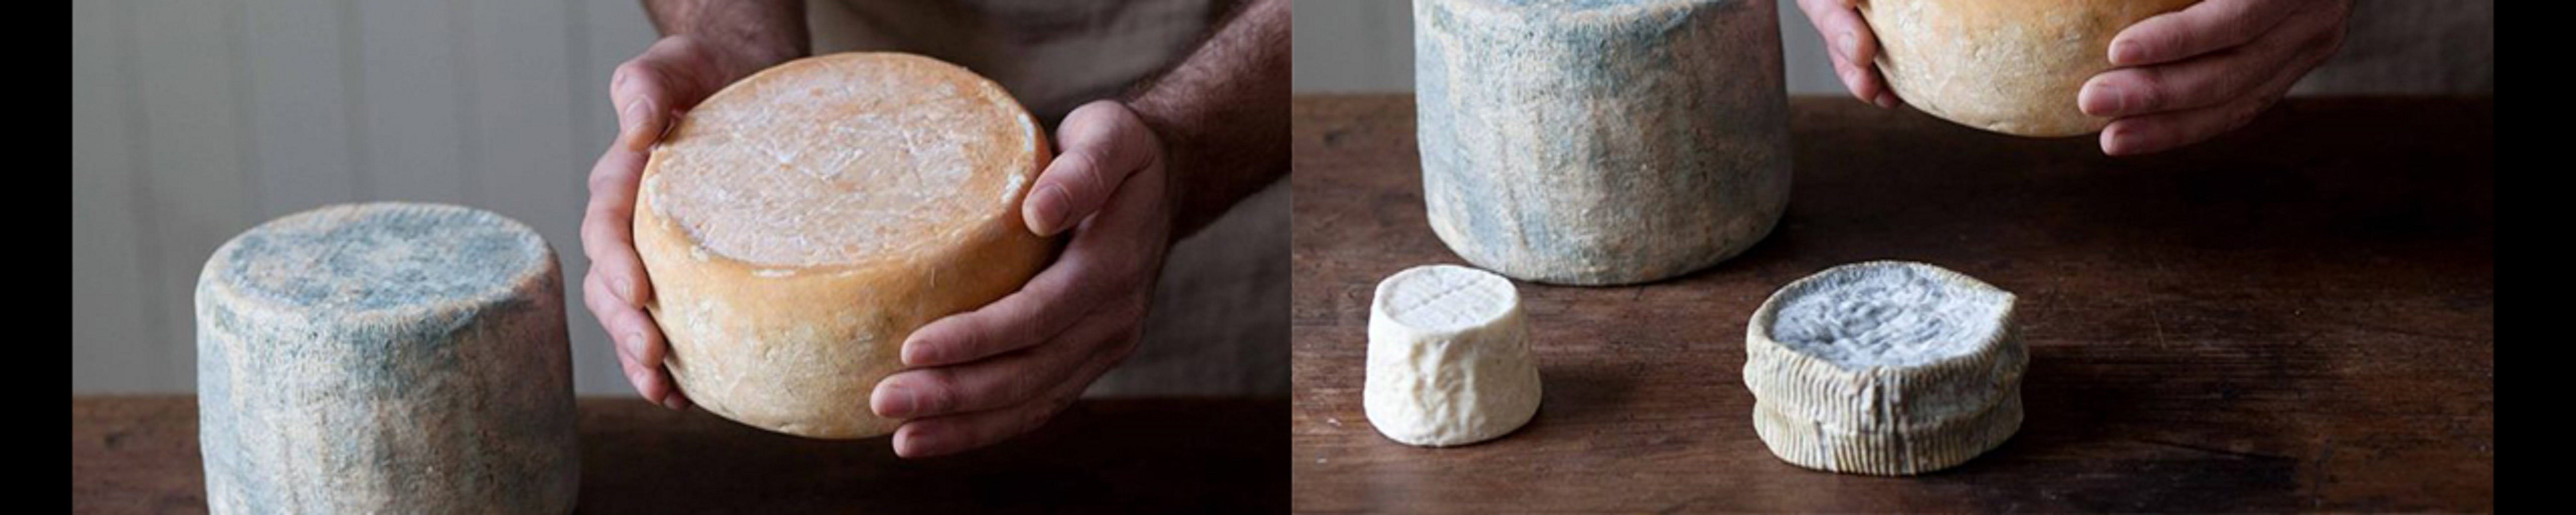 Cheese Making Basics Class - Townsville Tourism